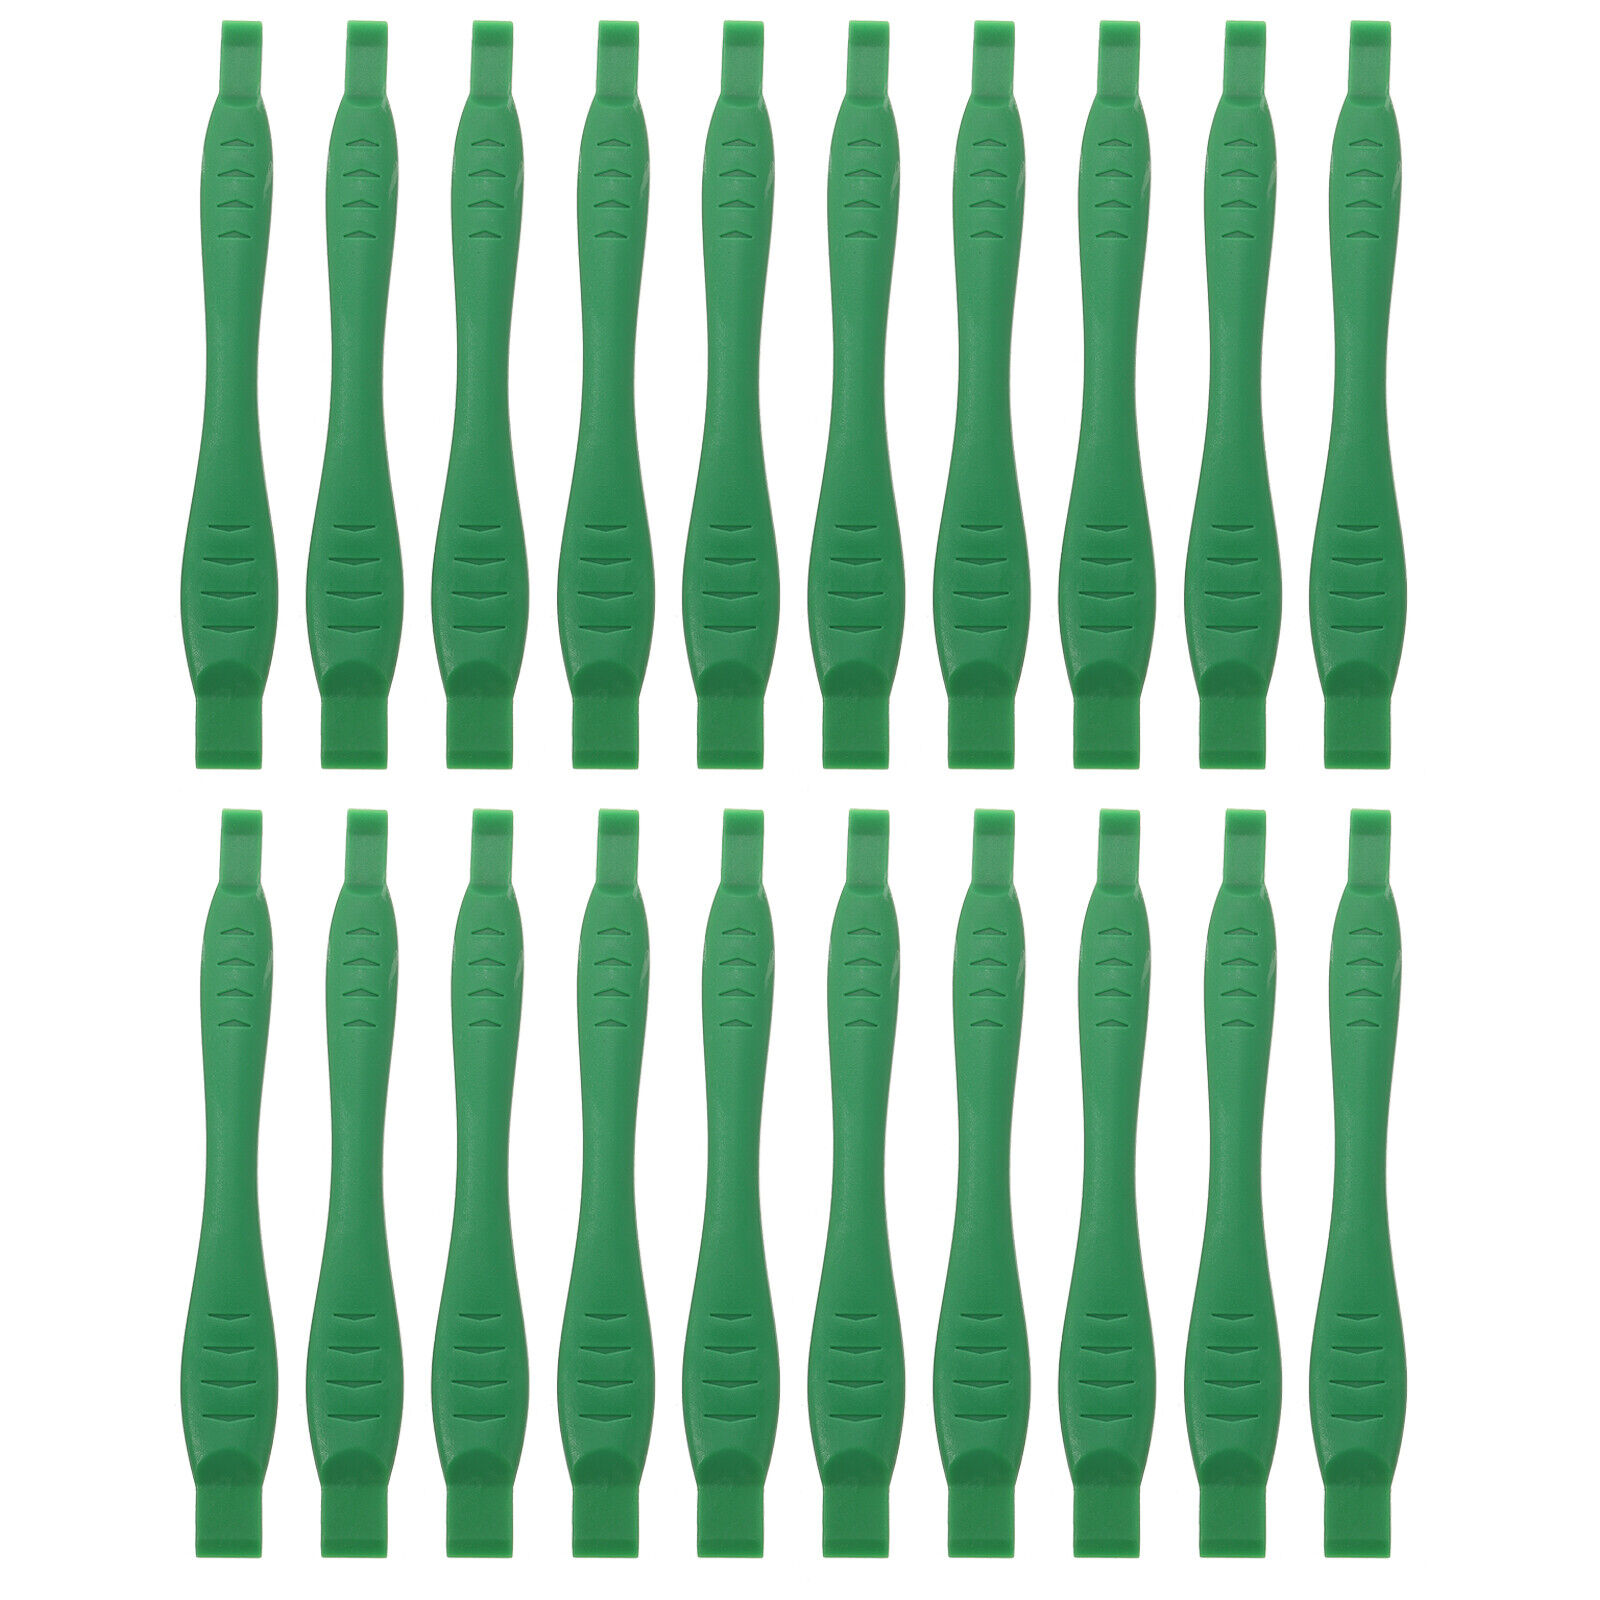 10pcs Universal Plastic Stick Spudger Crowbar Pry Opening Tools Repair, Green